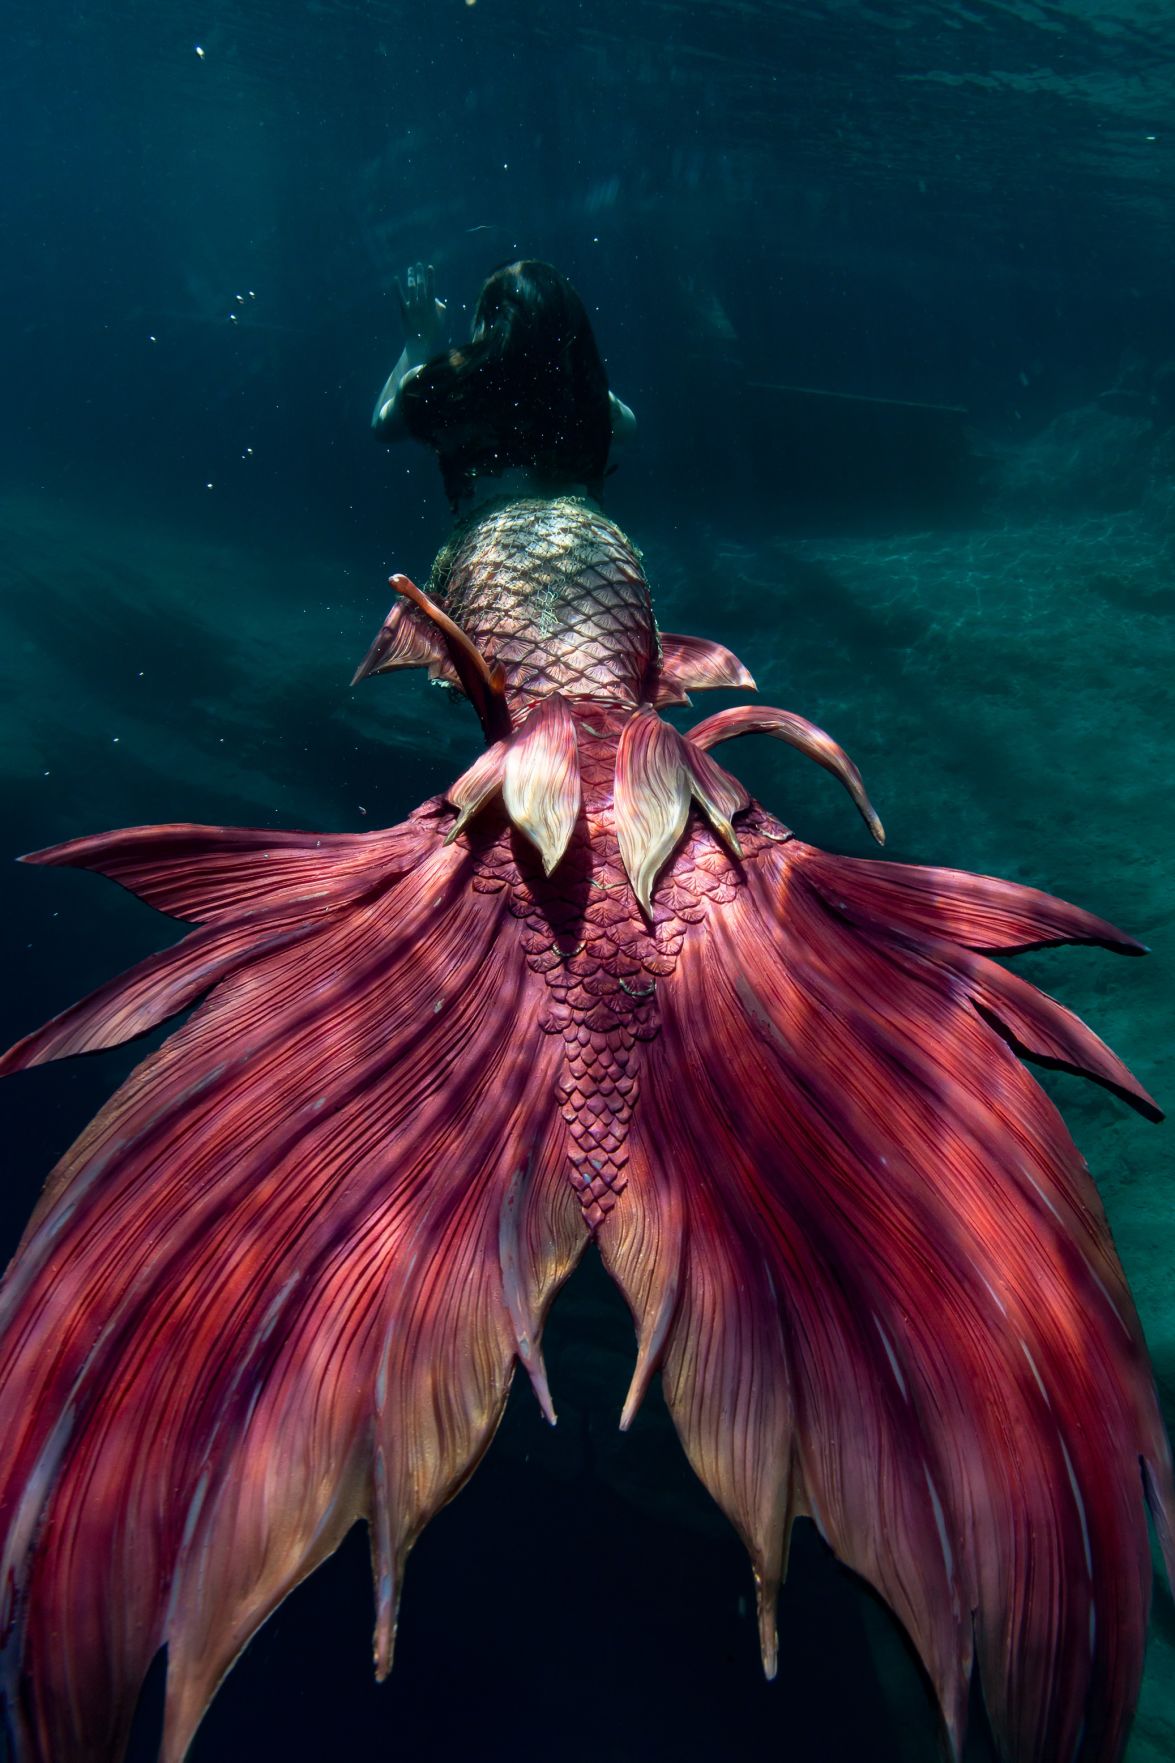 Watch: Real-life mermaids swim through tropical fish tank at